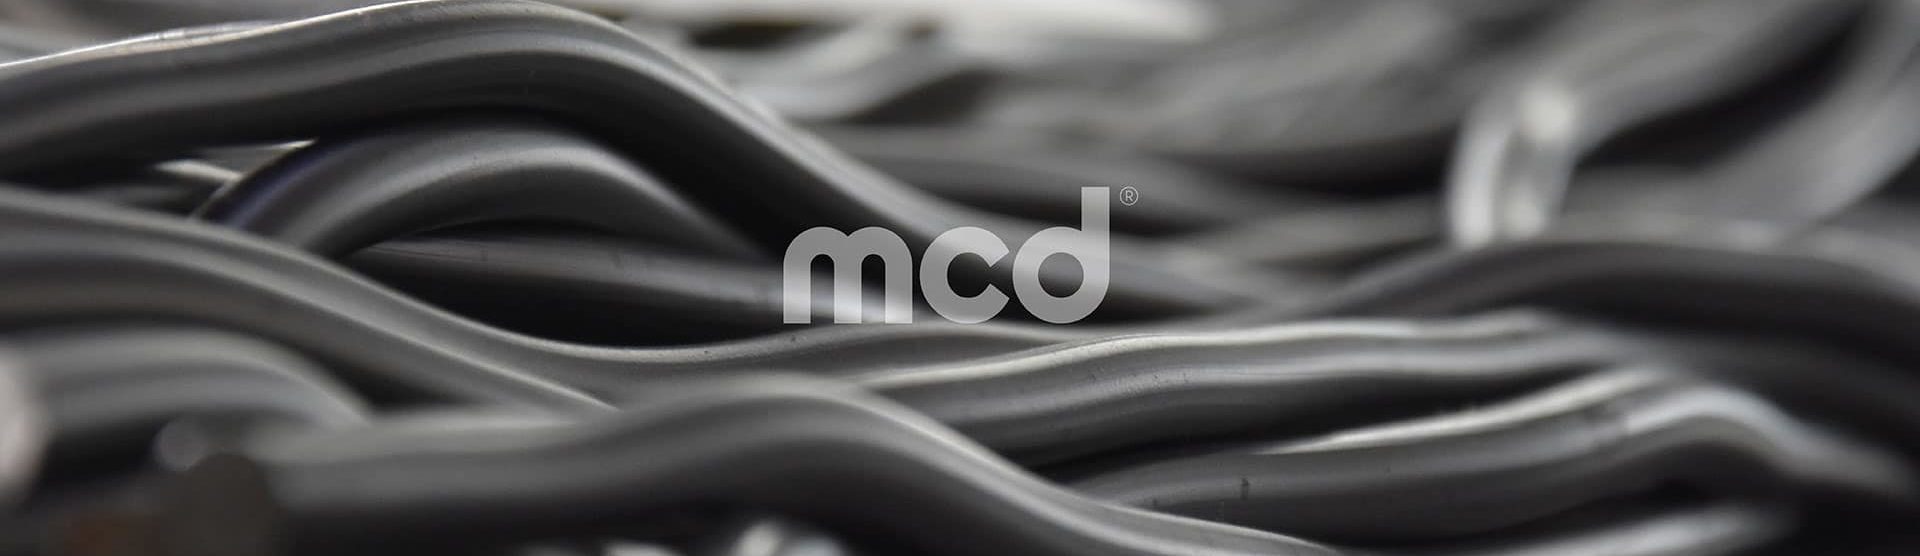 mcd-produits-joints-elastomers